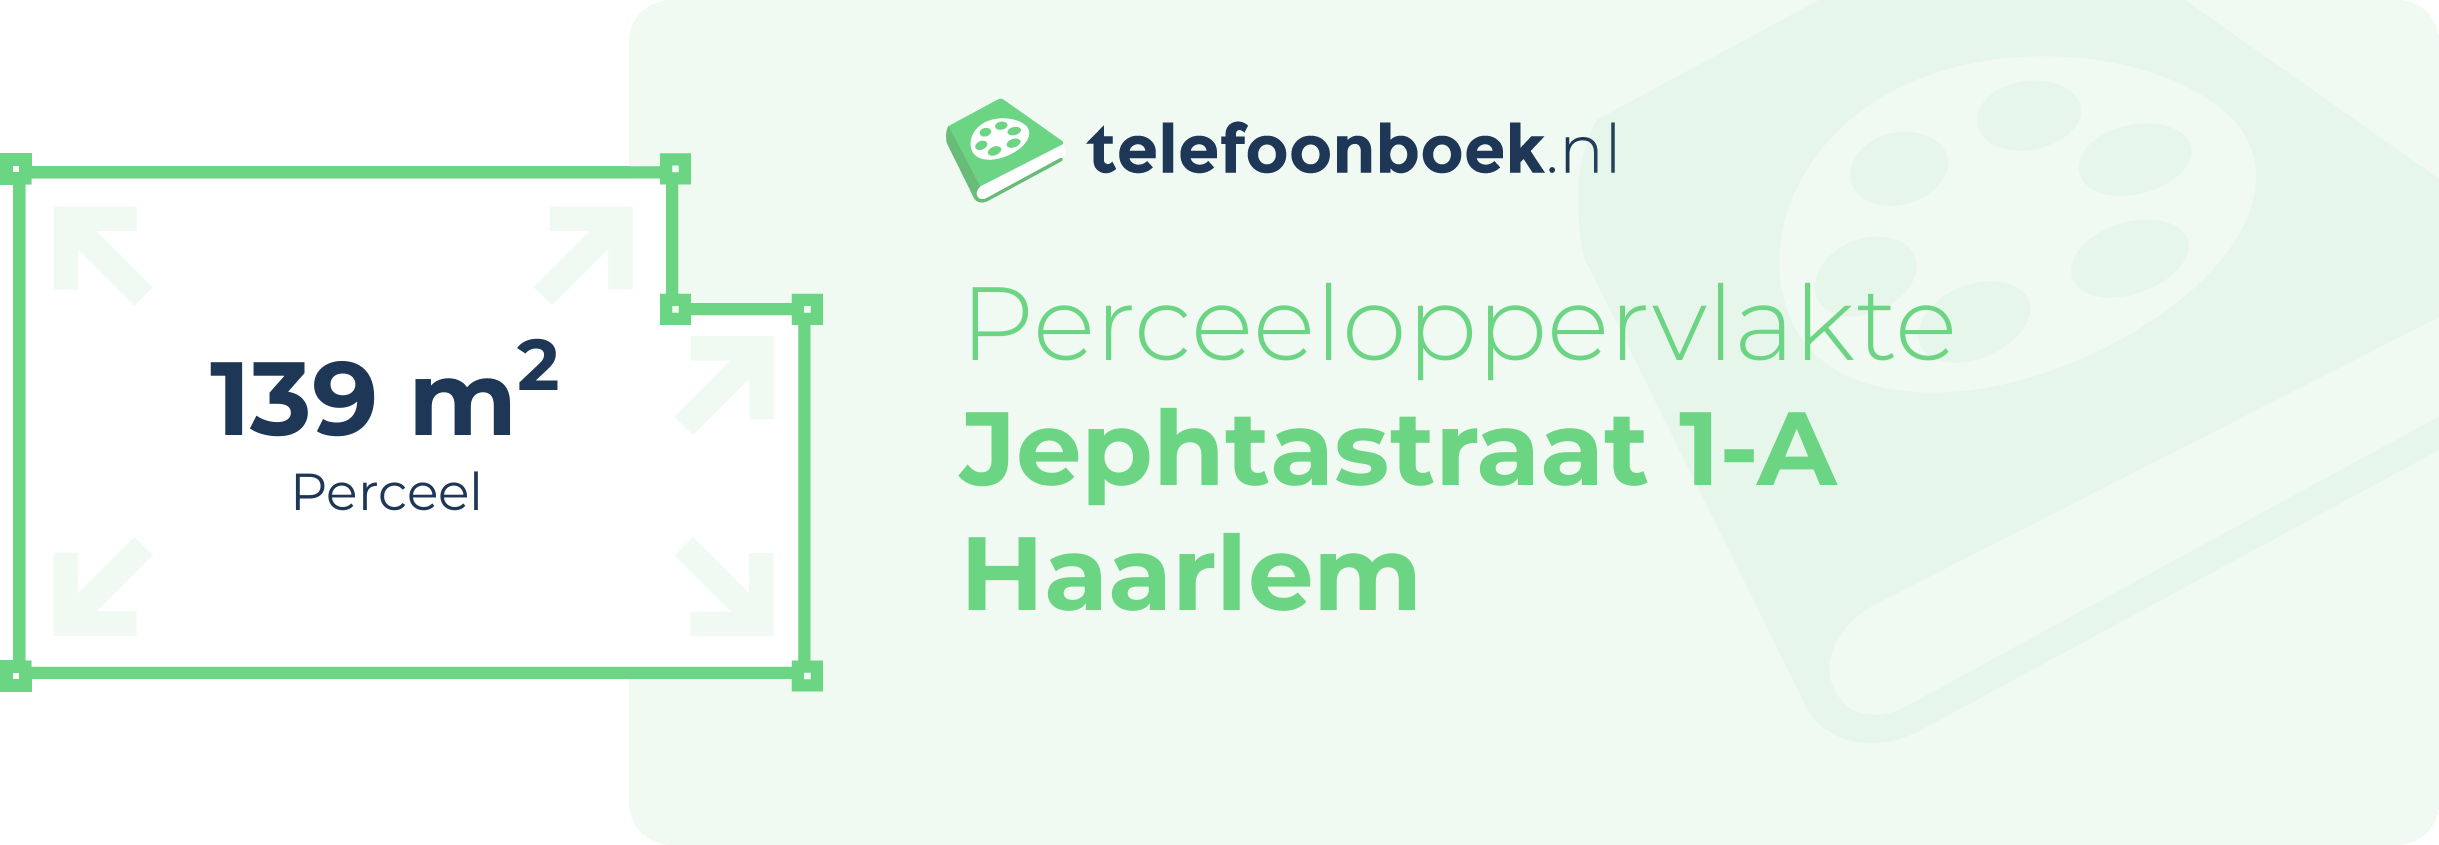 Perceeloppervlakte Jephtastraat 1-A Haarlem